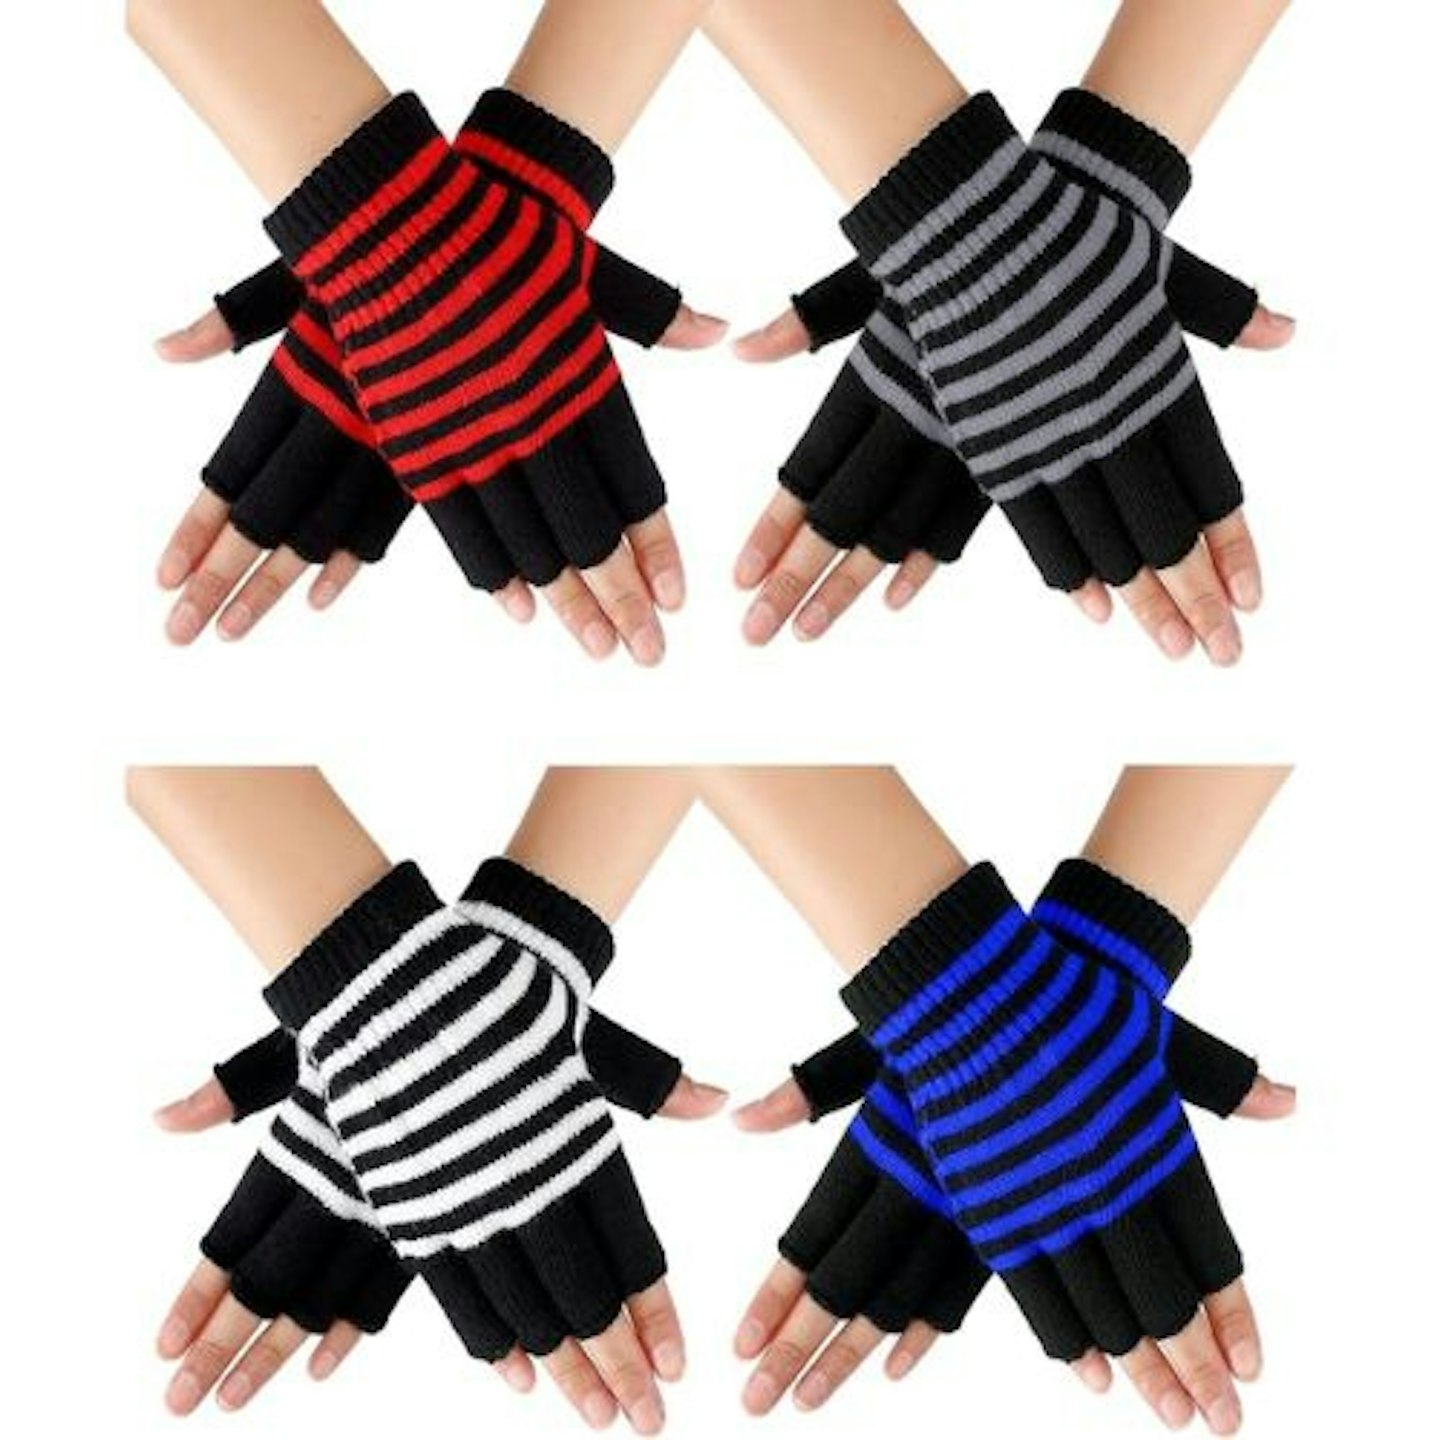 Striped gloves